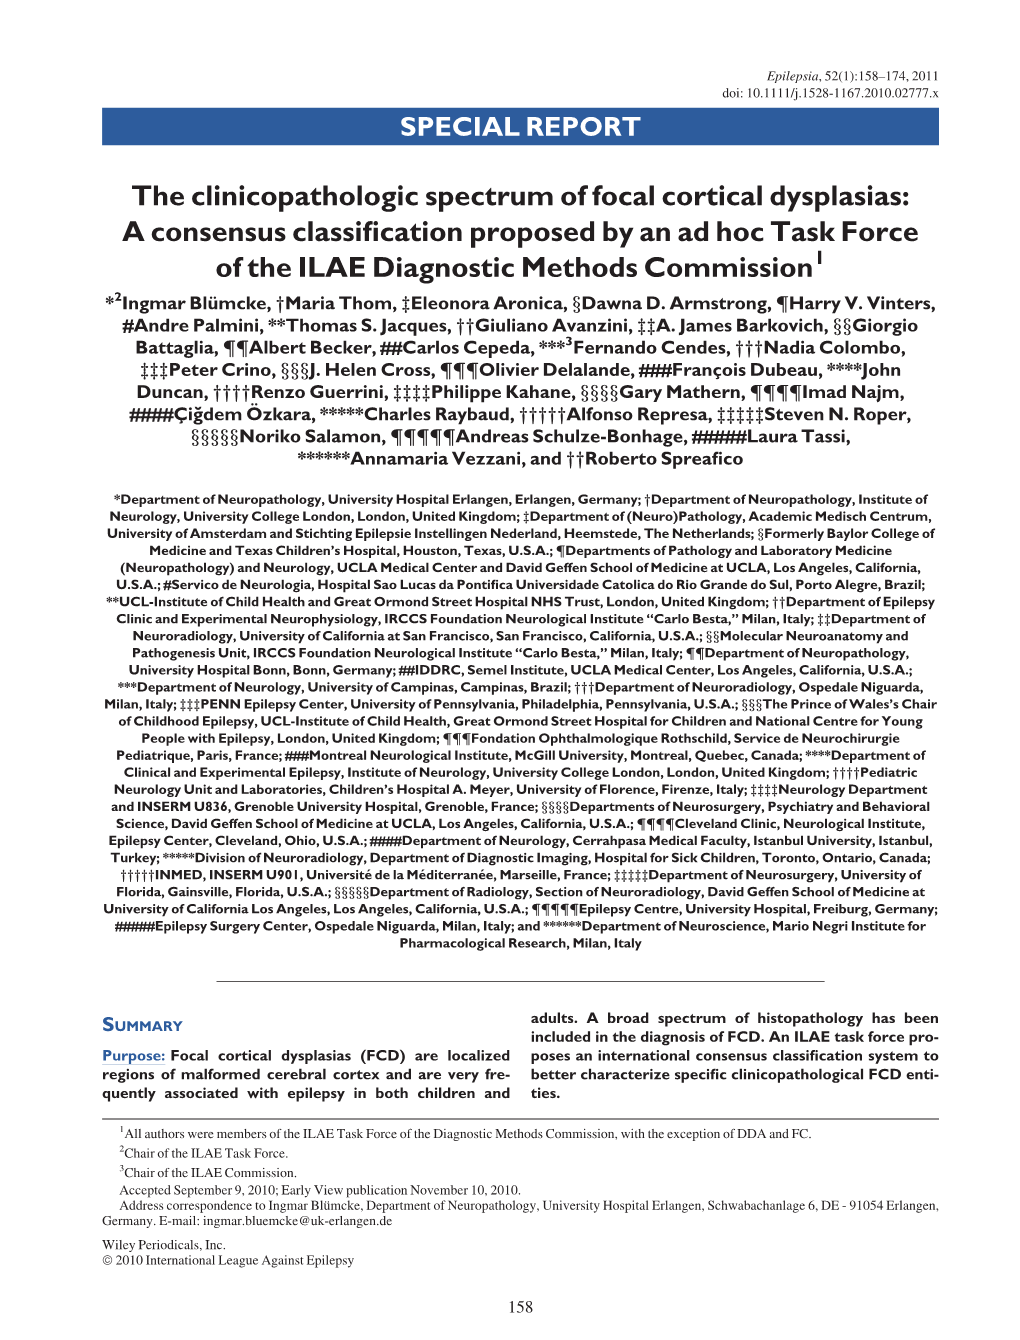 The Clinicopathologic Spectrum of Focal Cortical Dysplasias